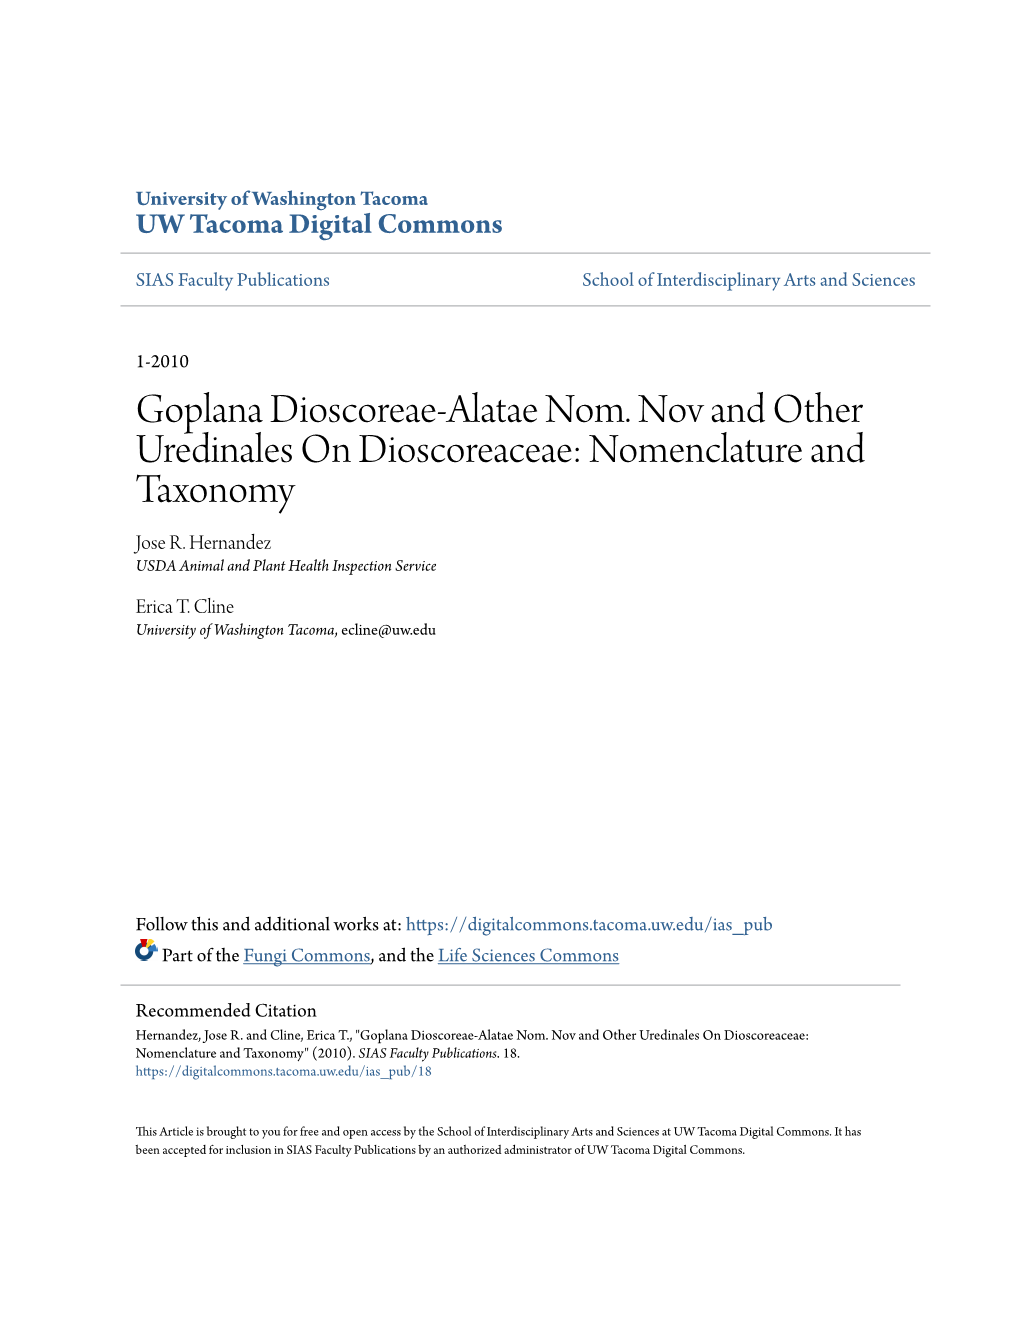 Goplana Dioscoreae-Alatae Nom. Nov and Other Uredinales on Dioscoreaceae: Nomenclature and Taxonomy Jose R